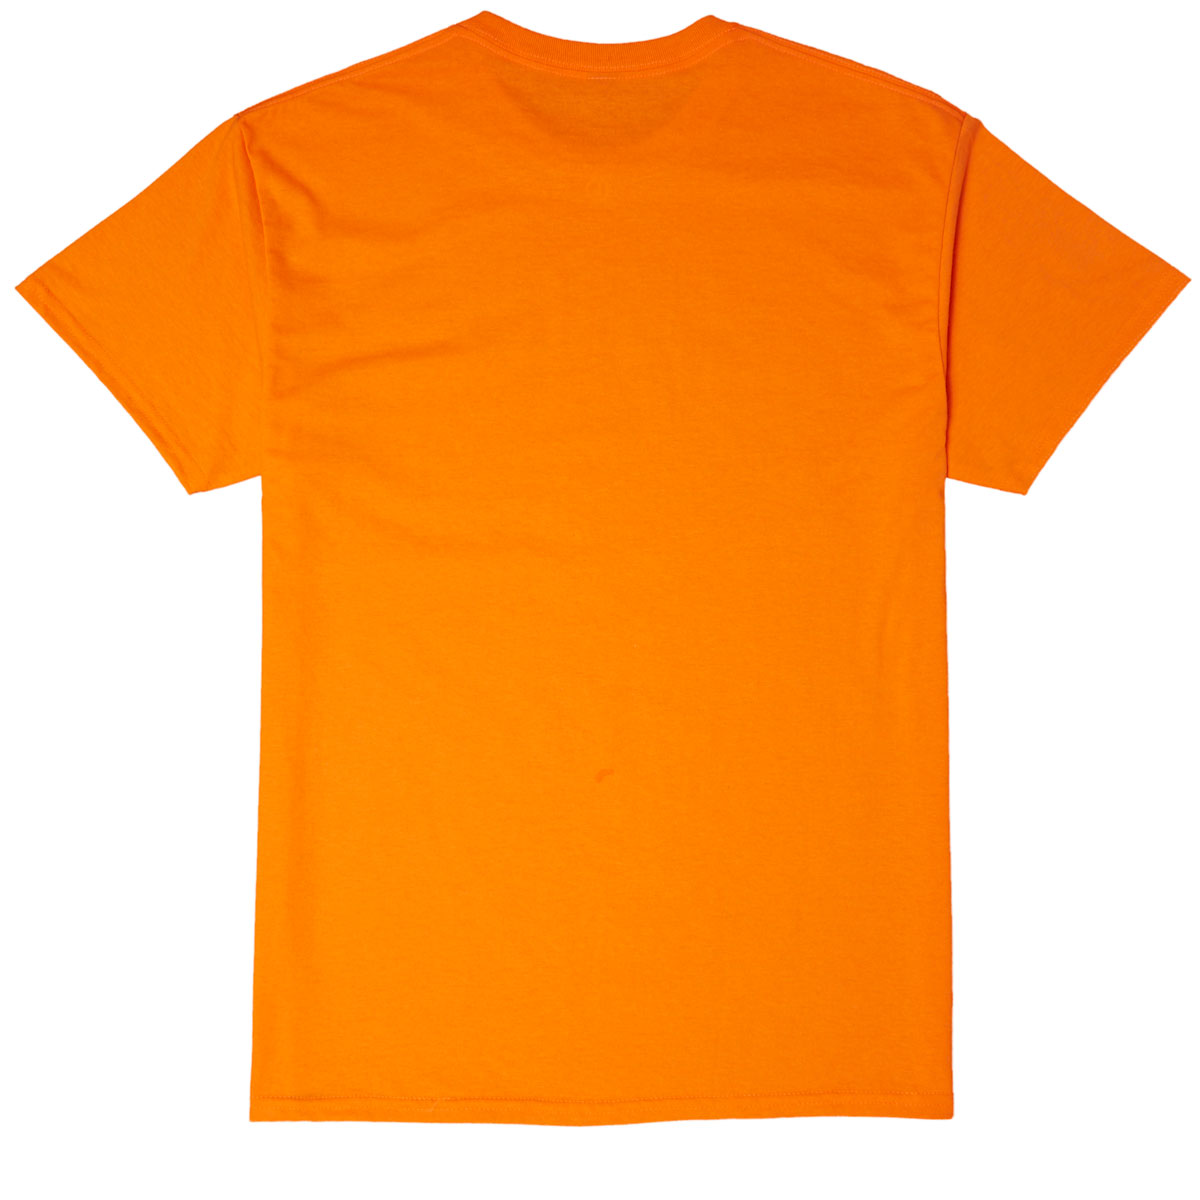 CCS Original Heavyweight T-Shirt - Orange image 5